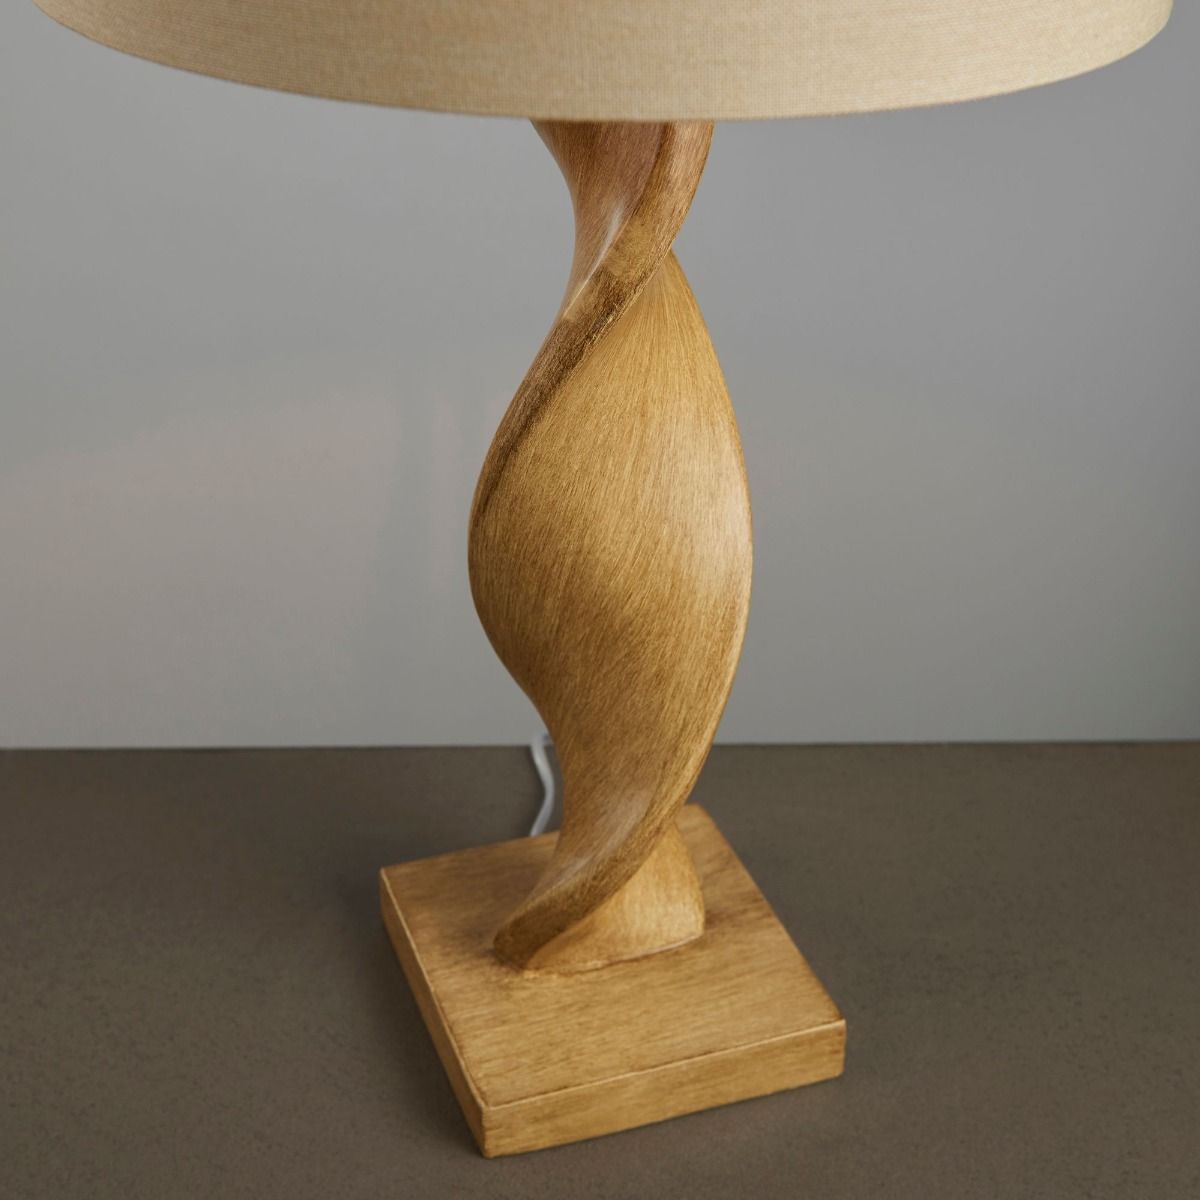 Abia Oak Effect & Natural Linen Table Lamp